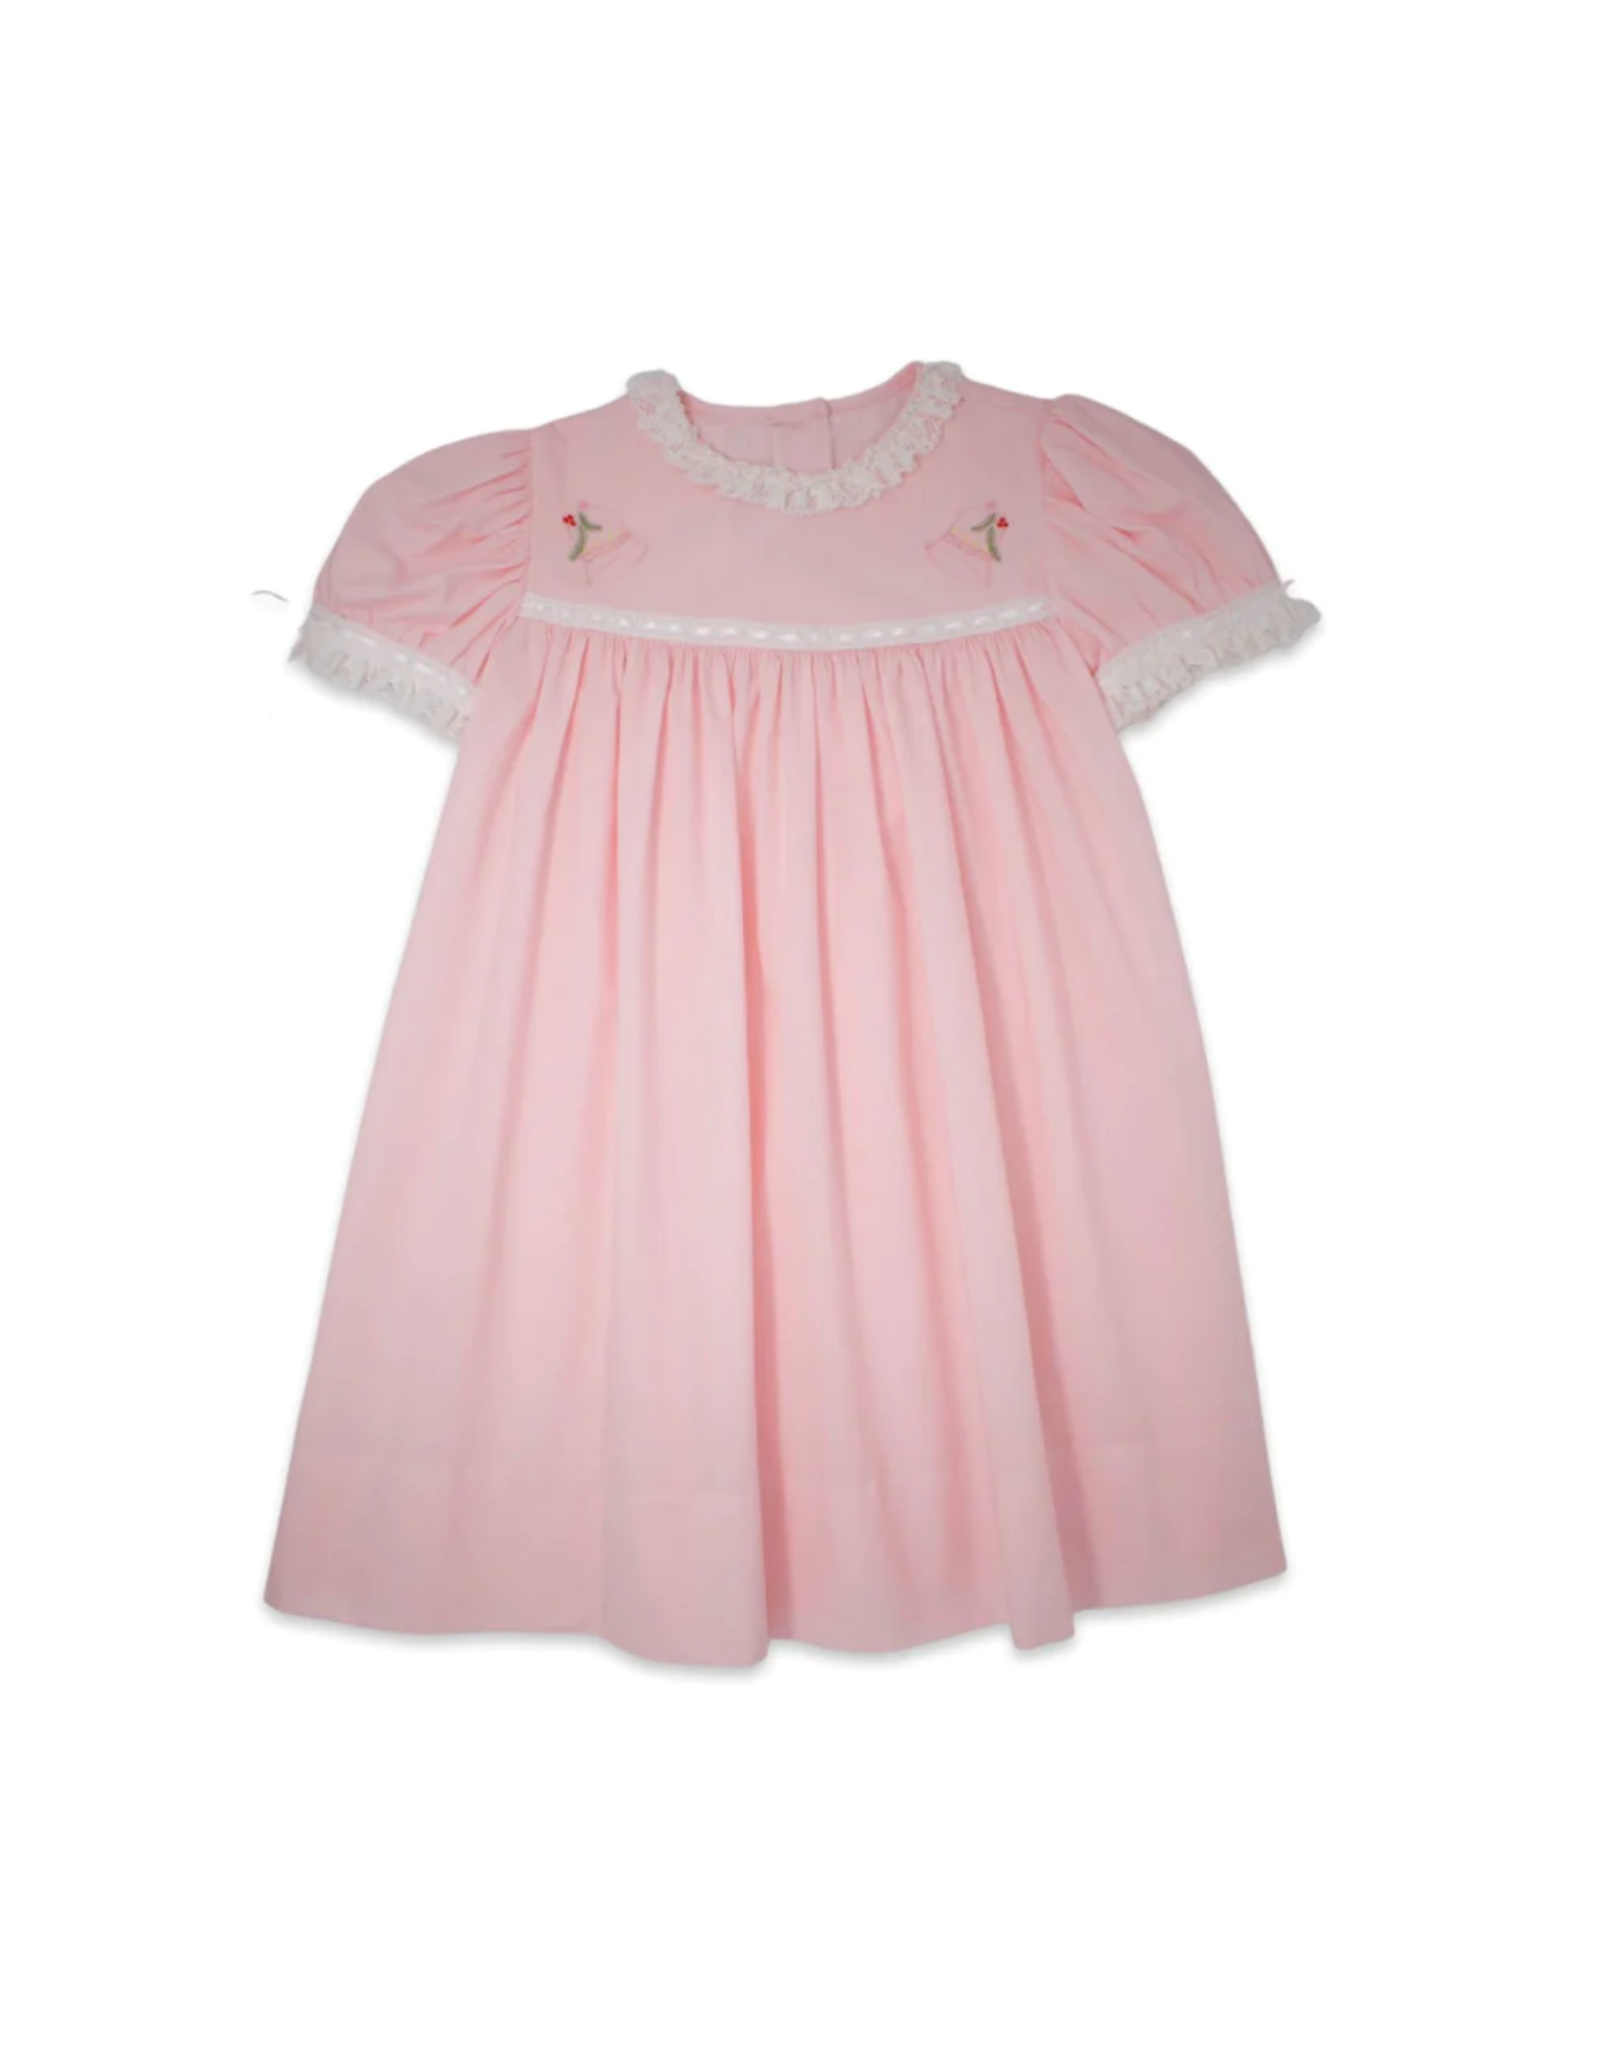 LullabySet Tiny Town Dress - Pink Batiste